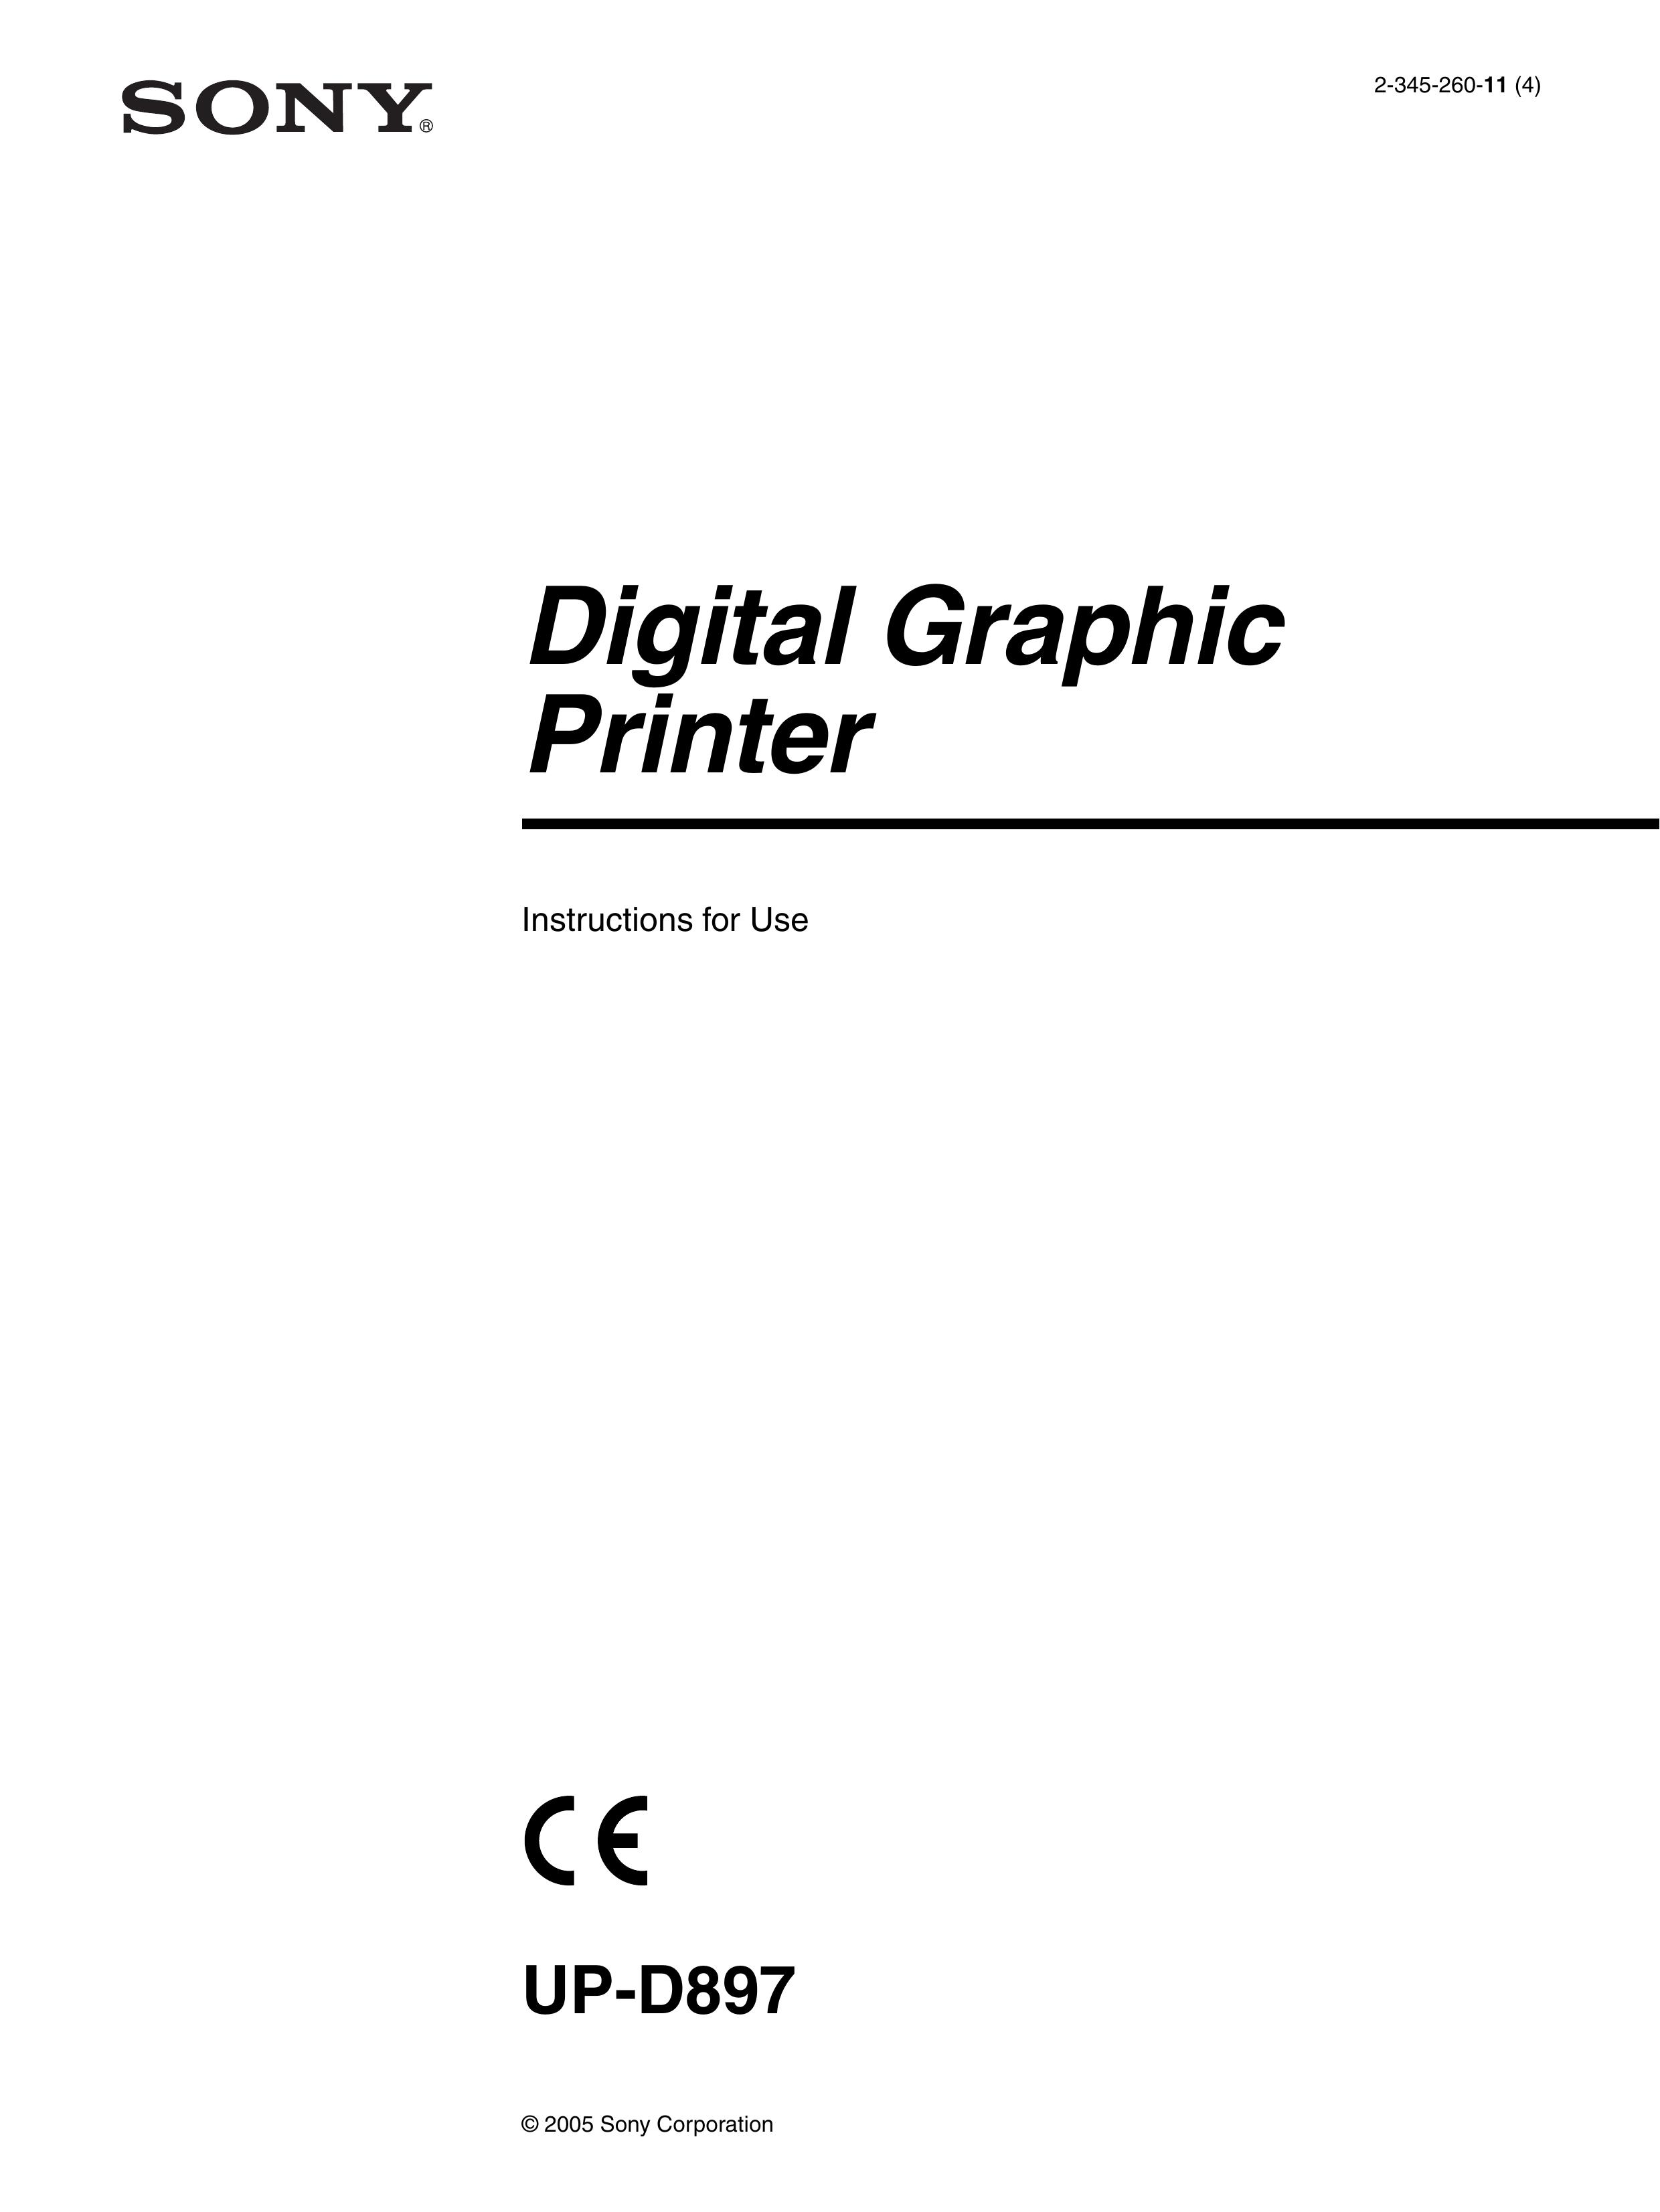 Sony UP-D897 Photo Printer User Manual